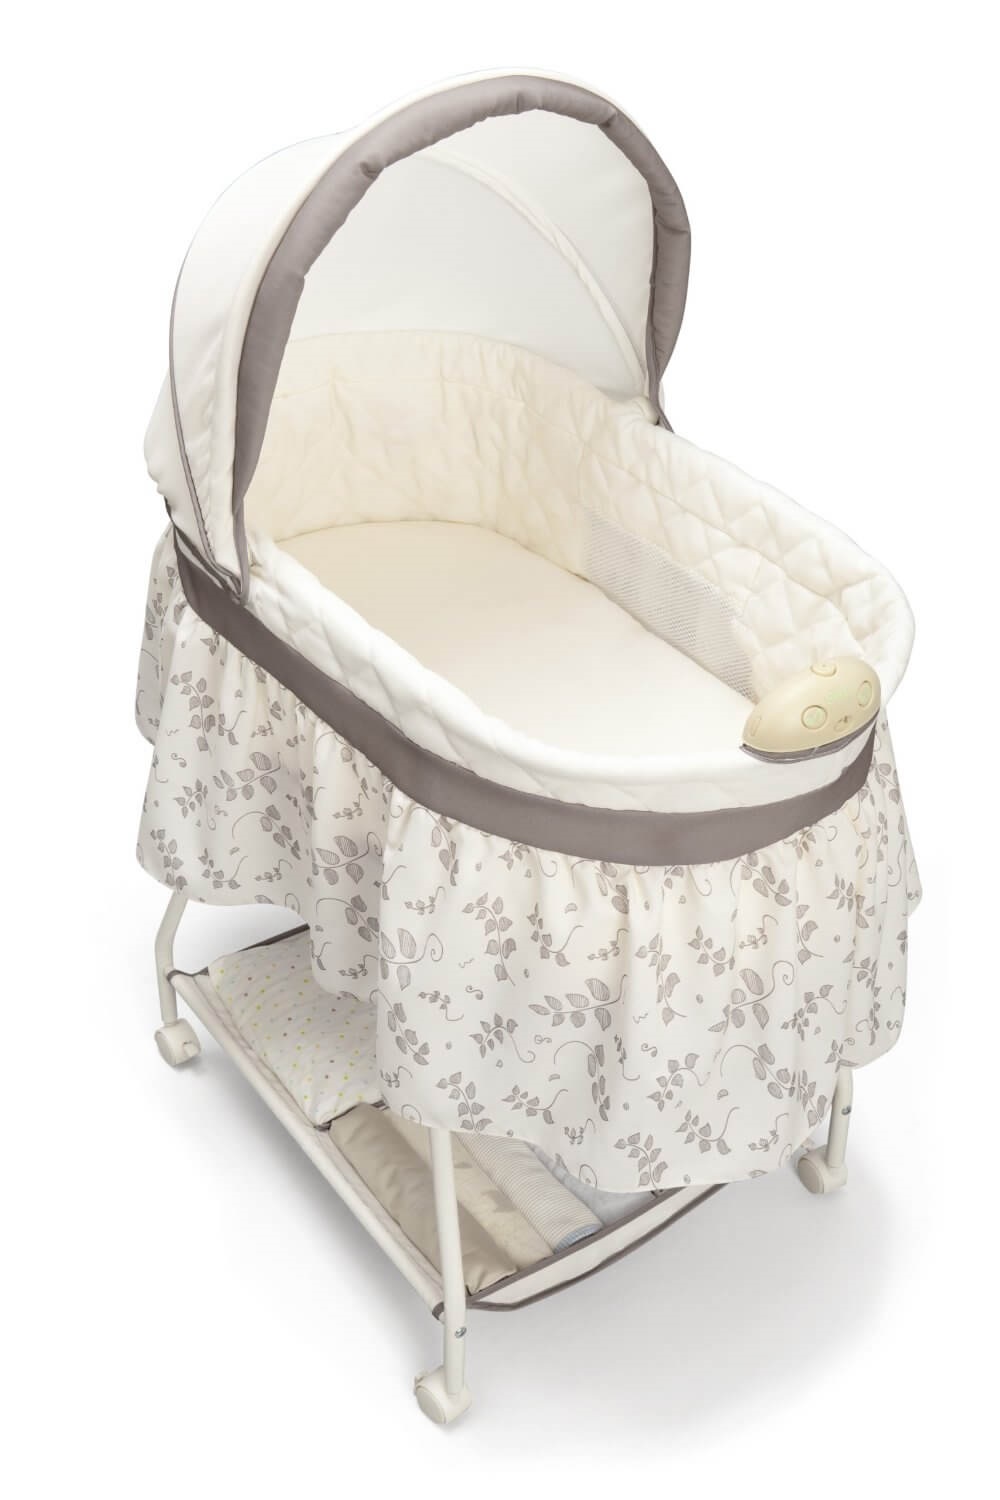 safest newborn bassinet